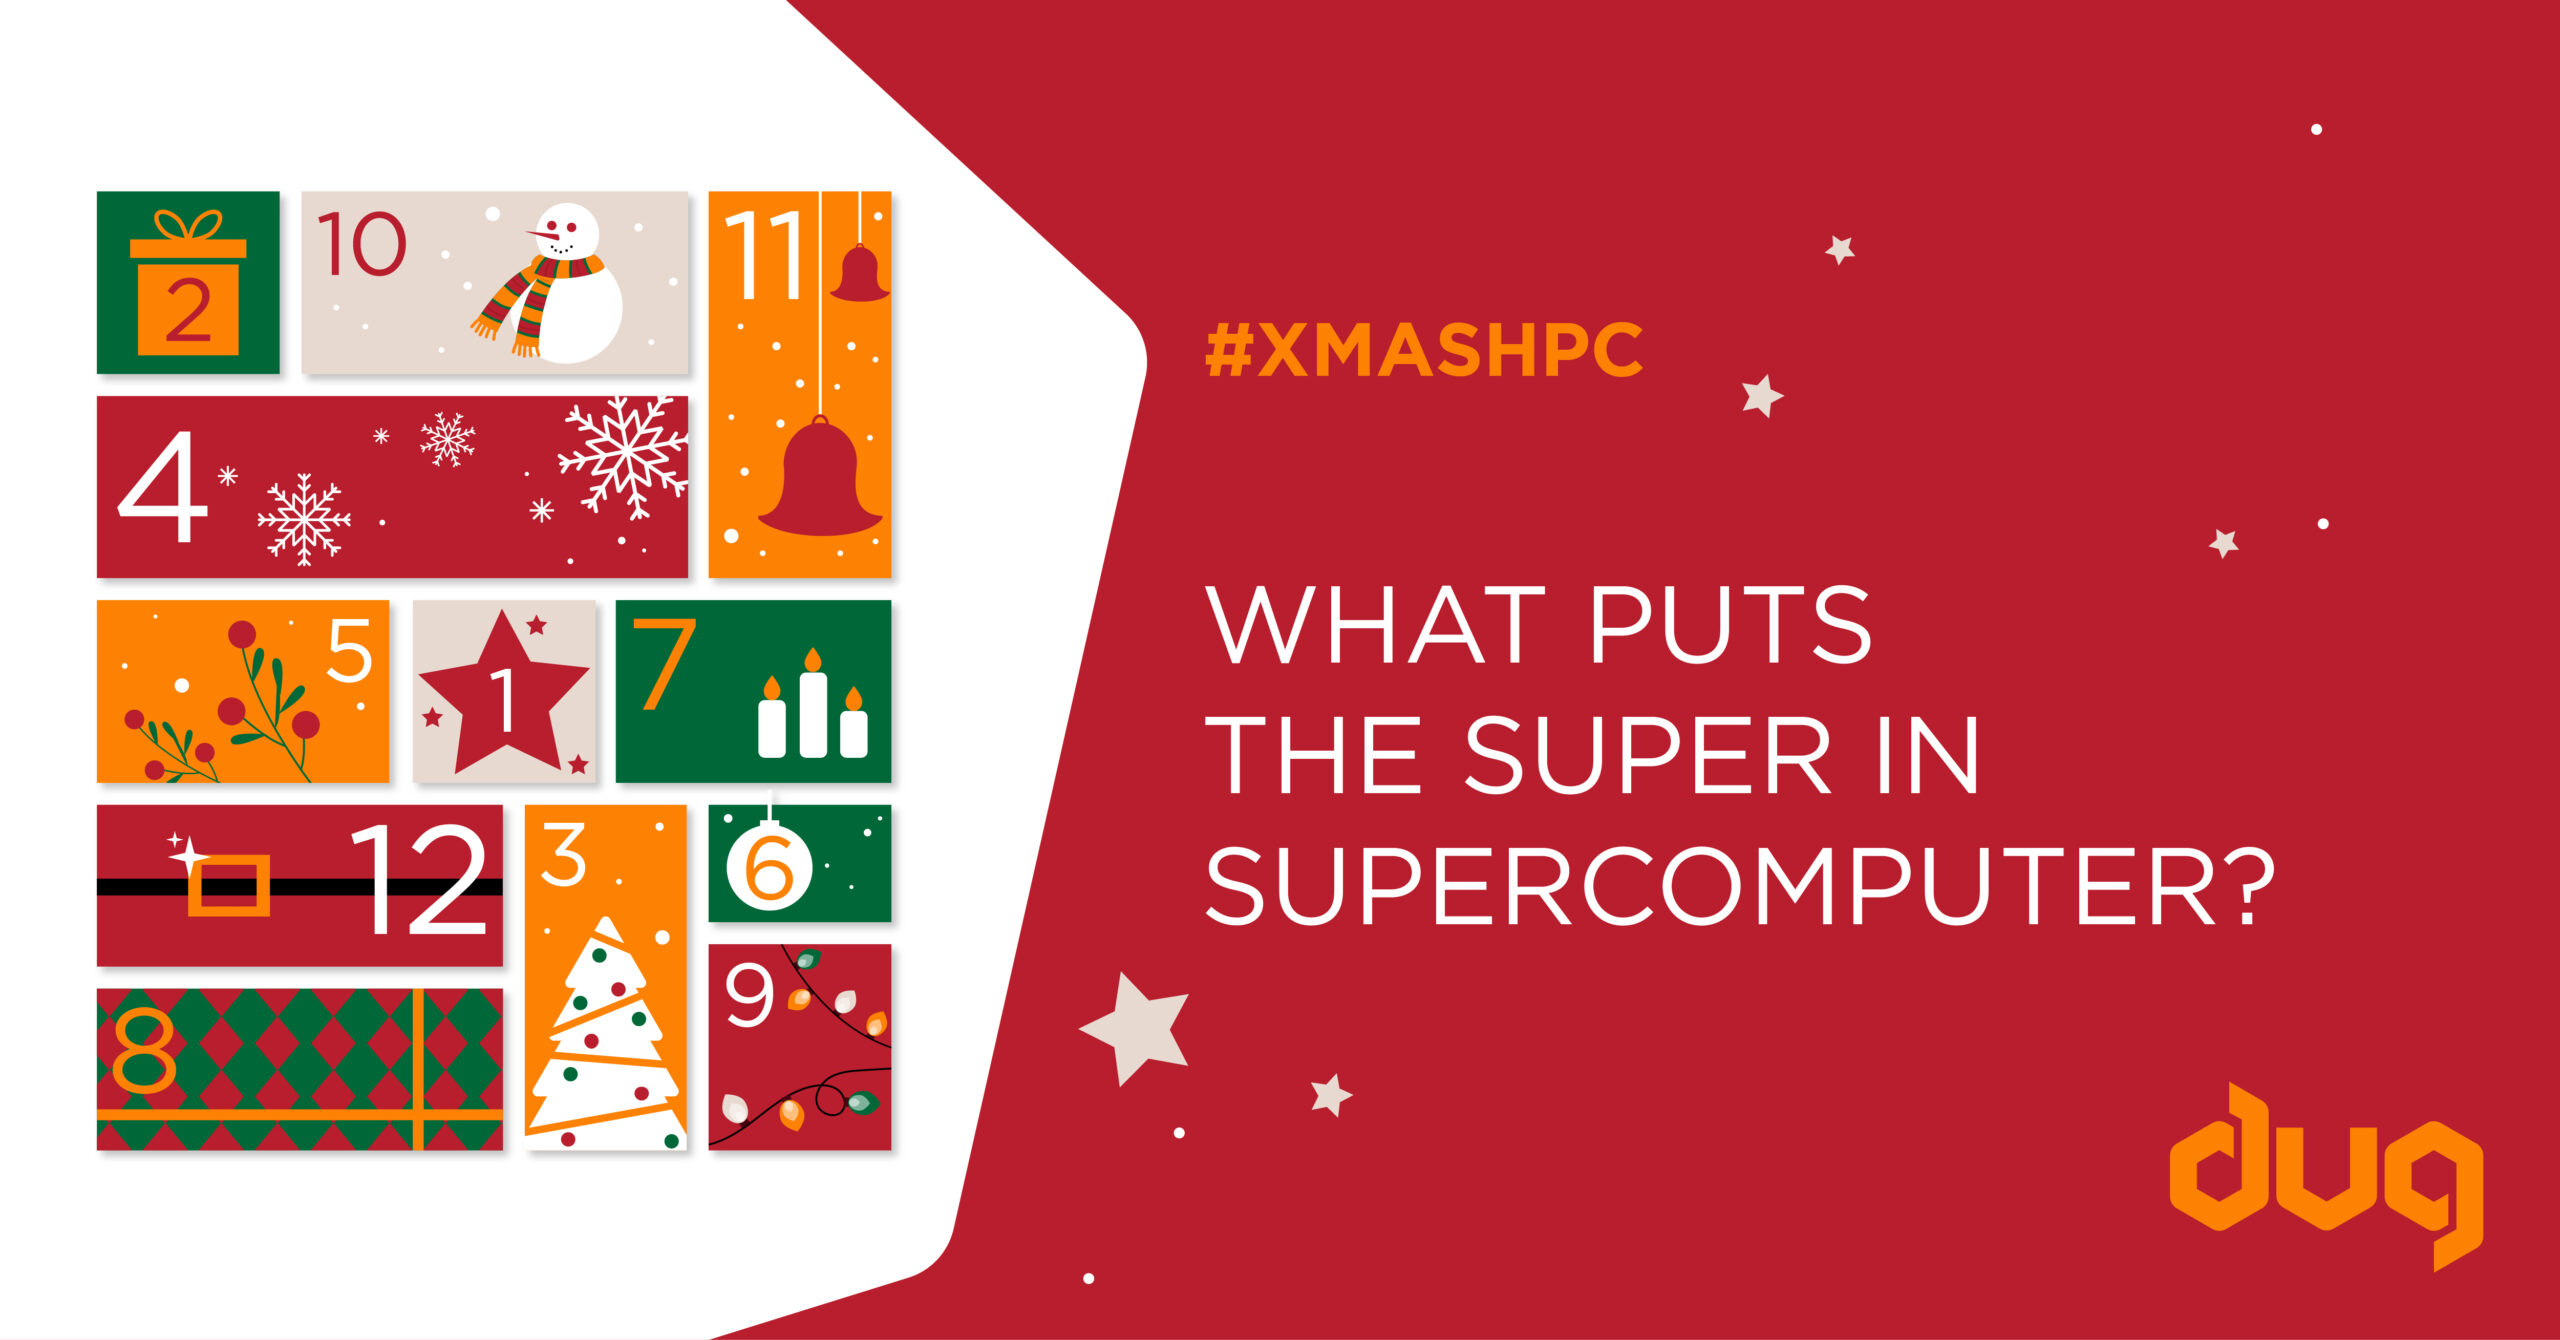 What puts the super in supercomputer?